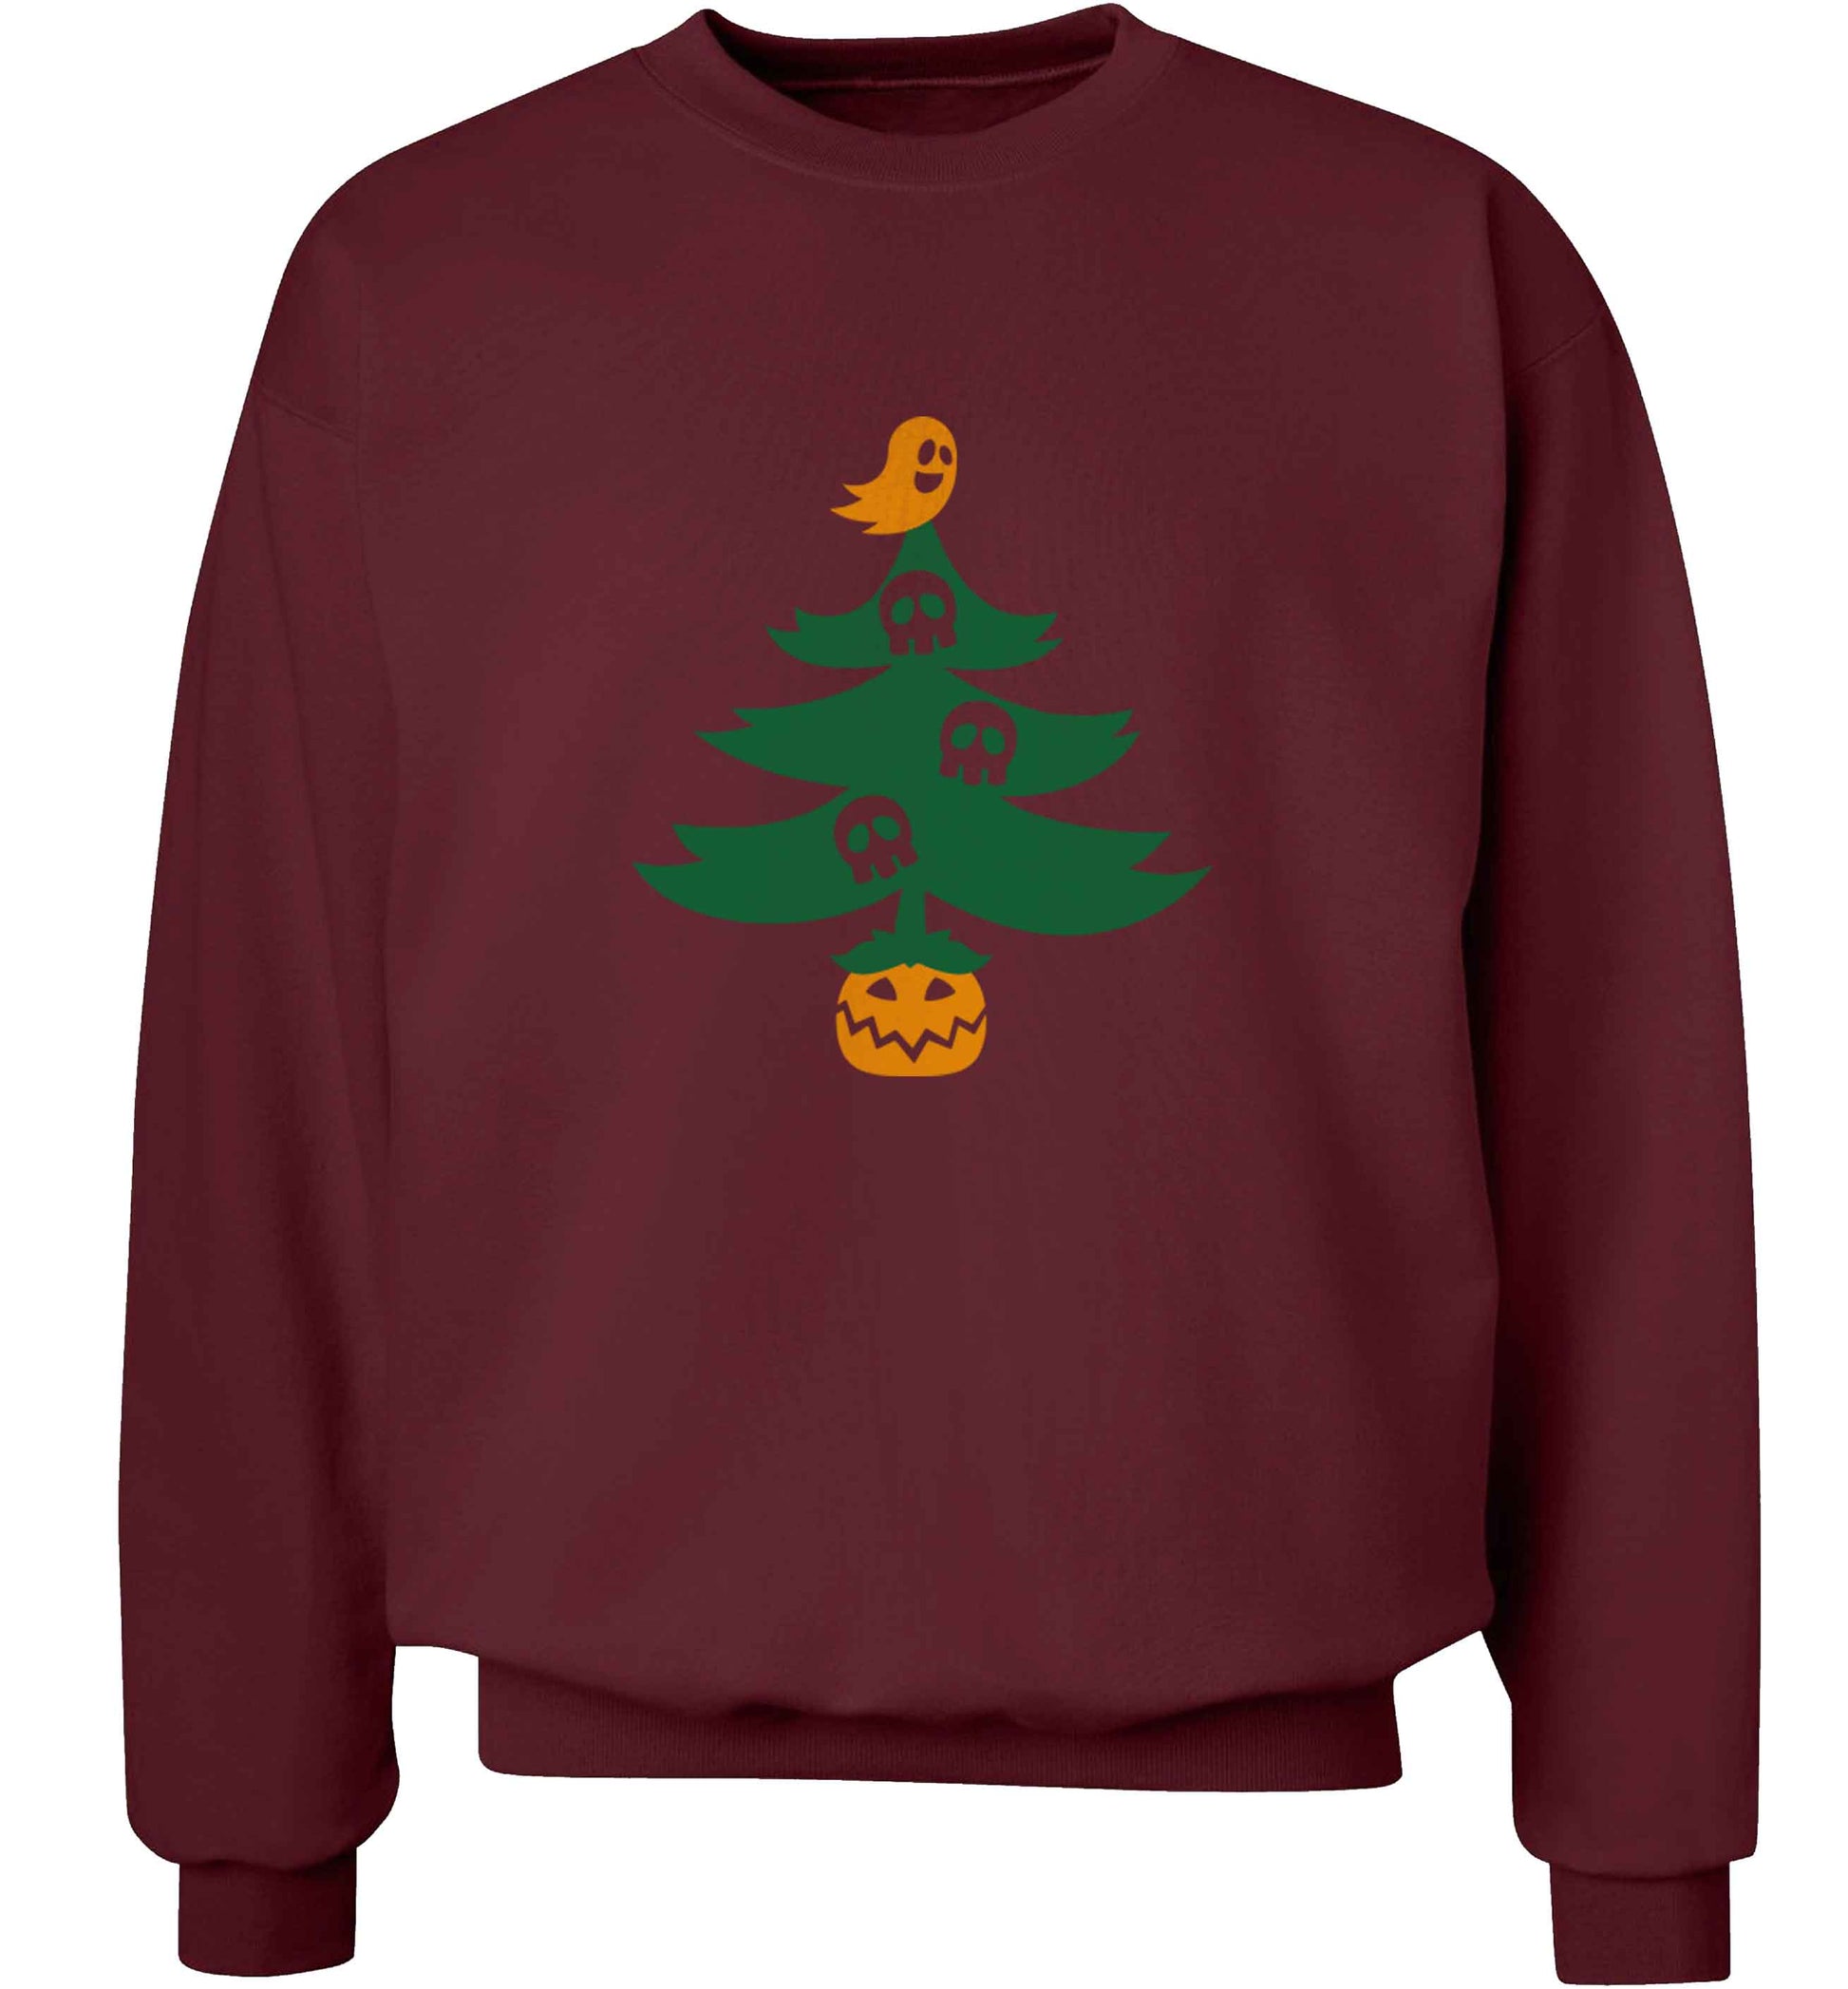 Halloween Christmas tree adult's unisex maroon sweater 2XL